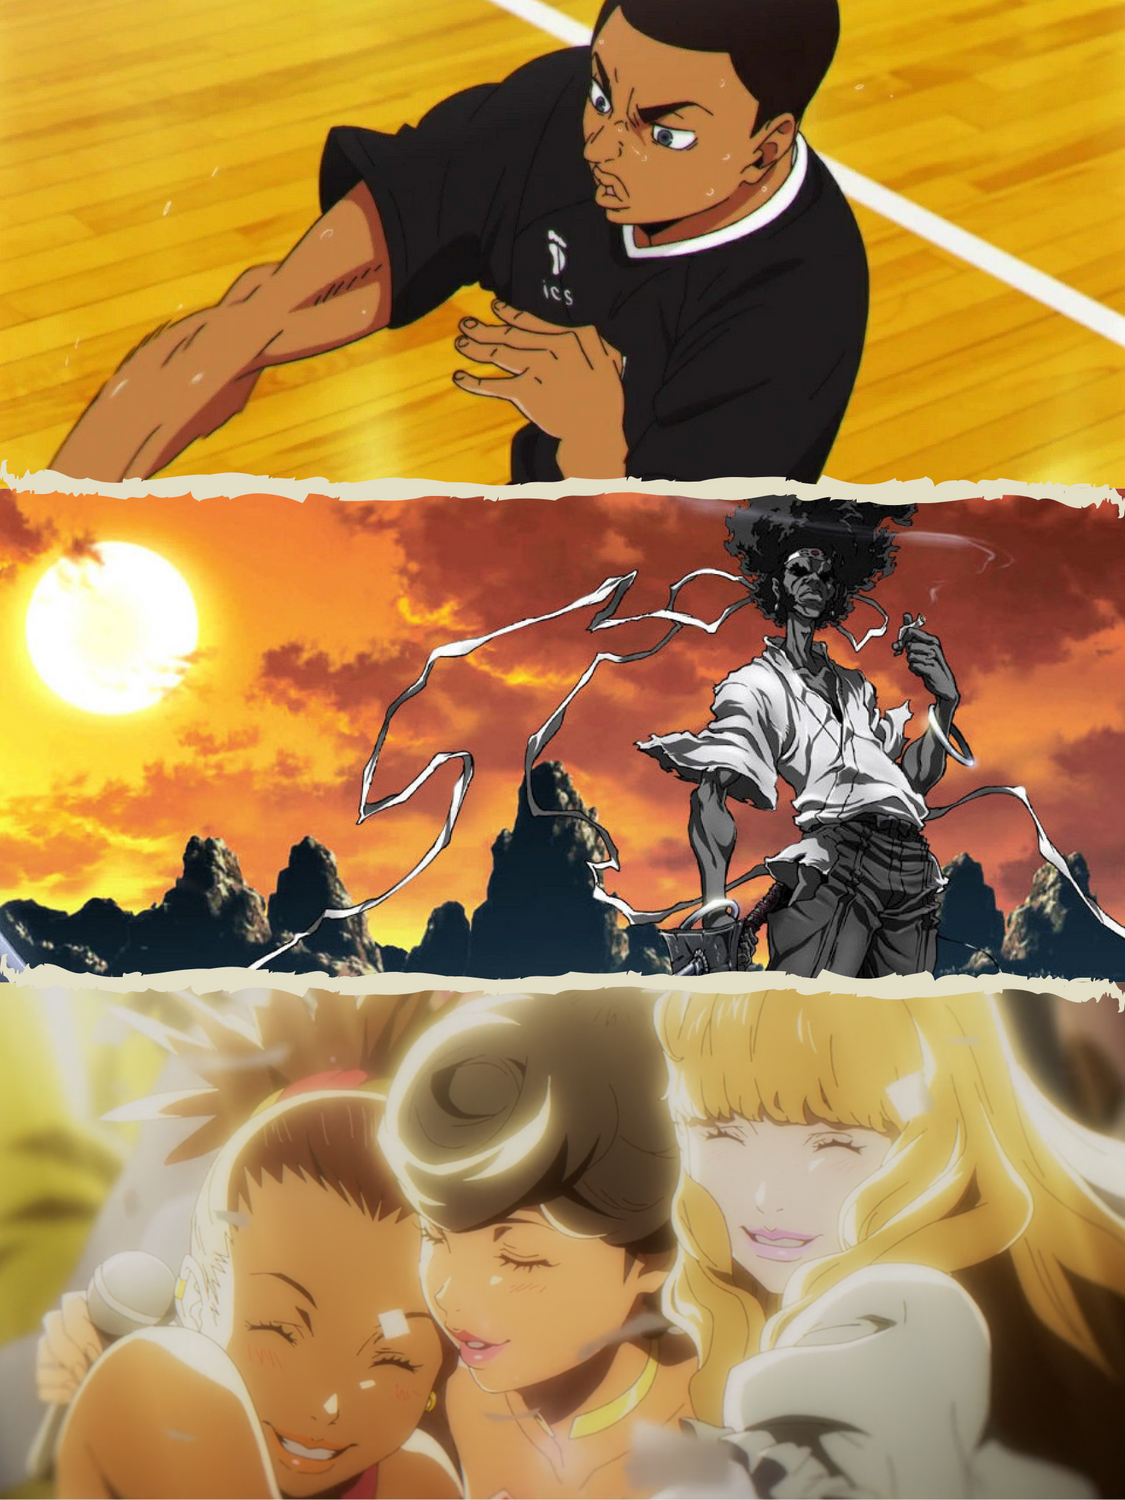 I love how animes depict sports like mini wars